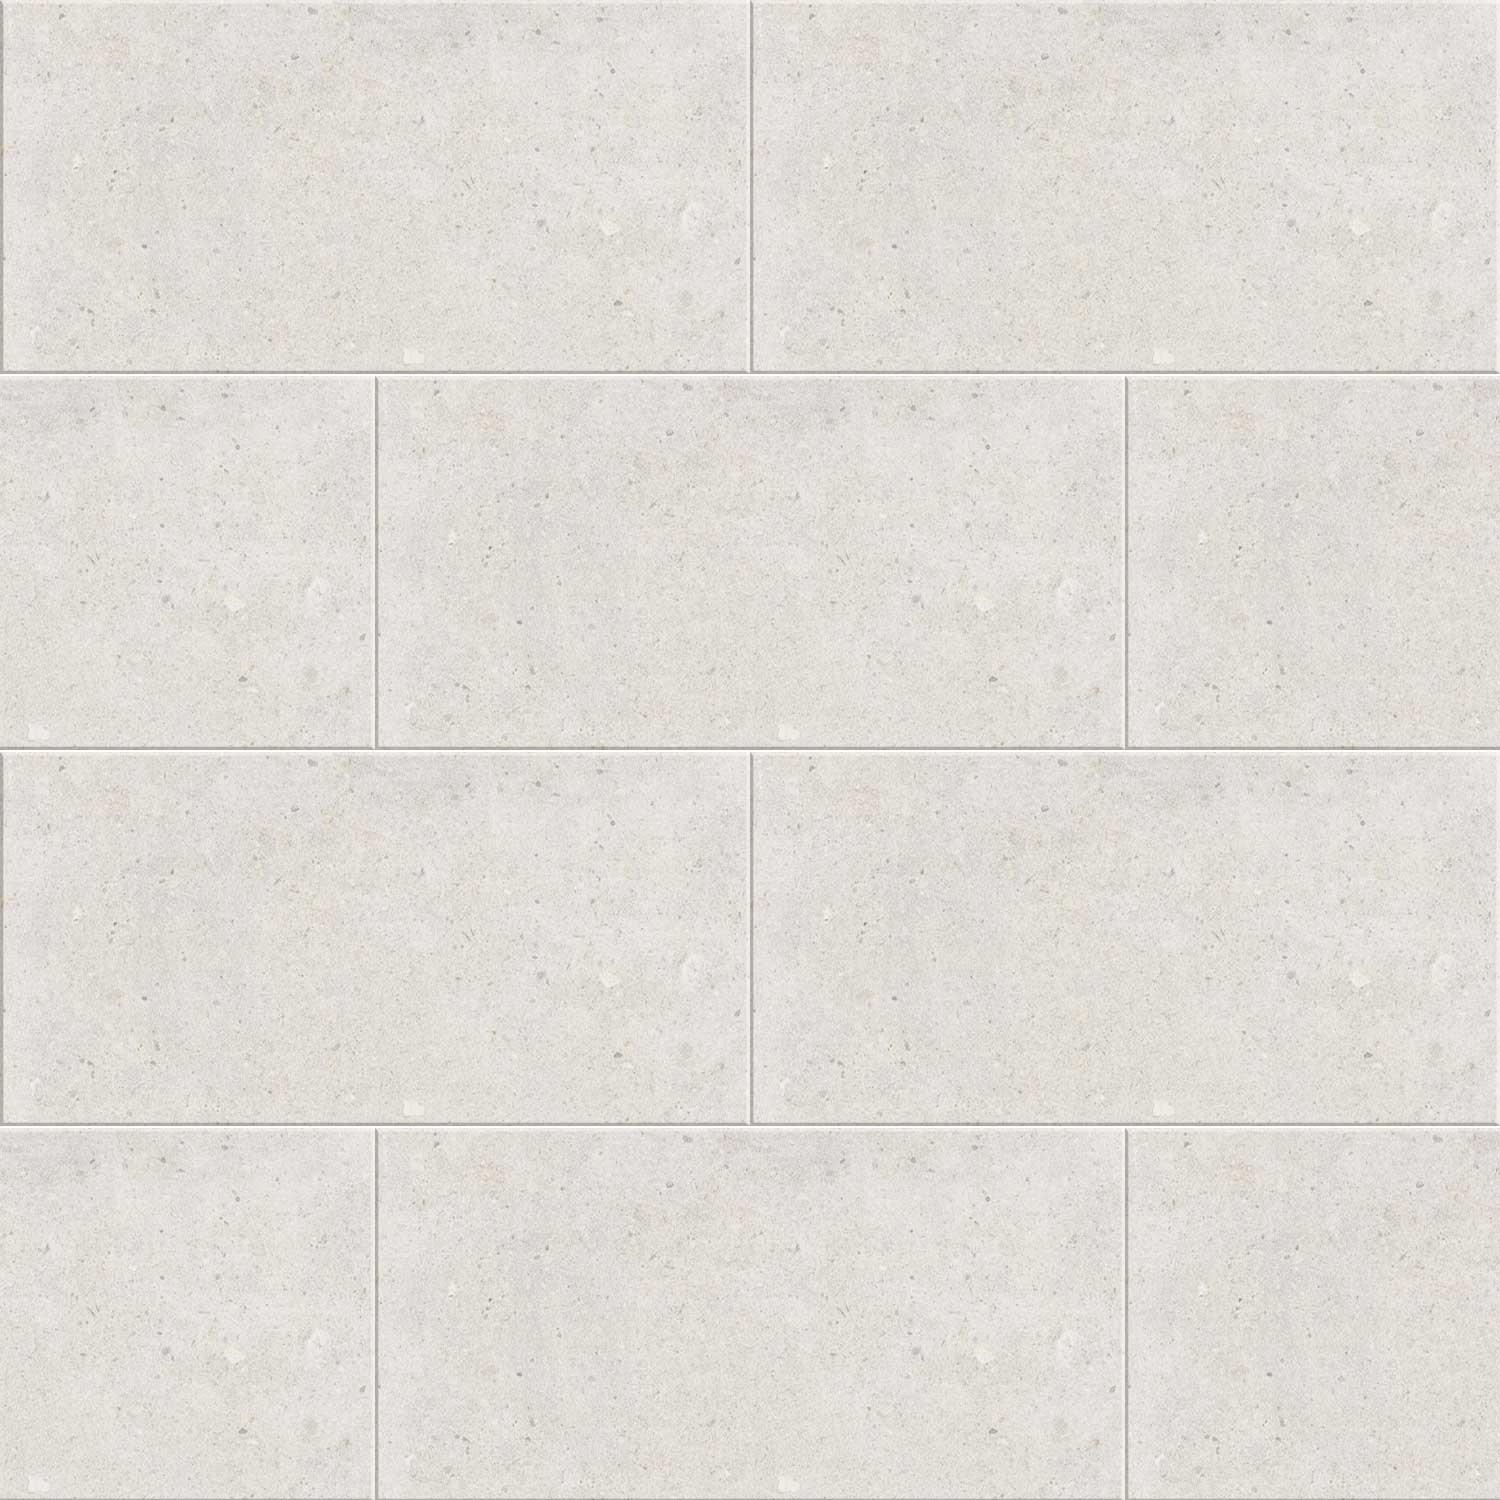 Ground White Porcelain Tile Wall Floor Stone Effect R10 300x600mm